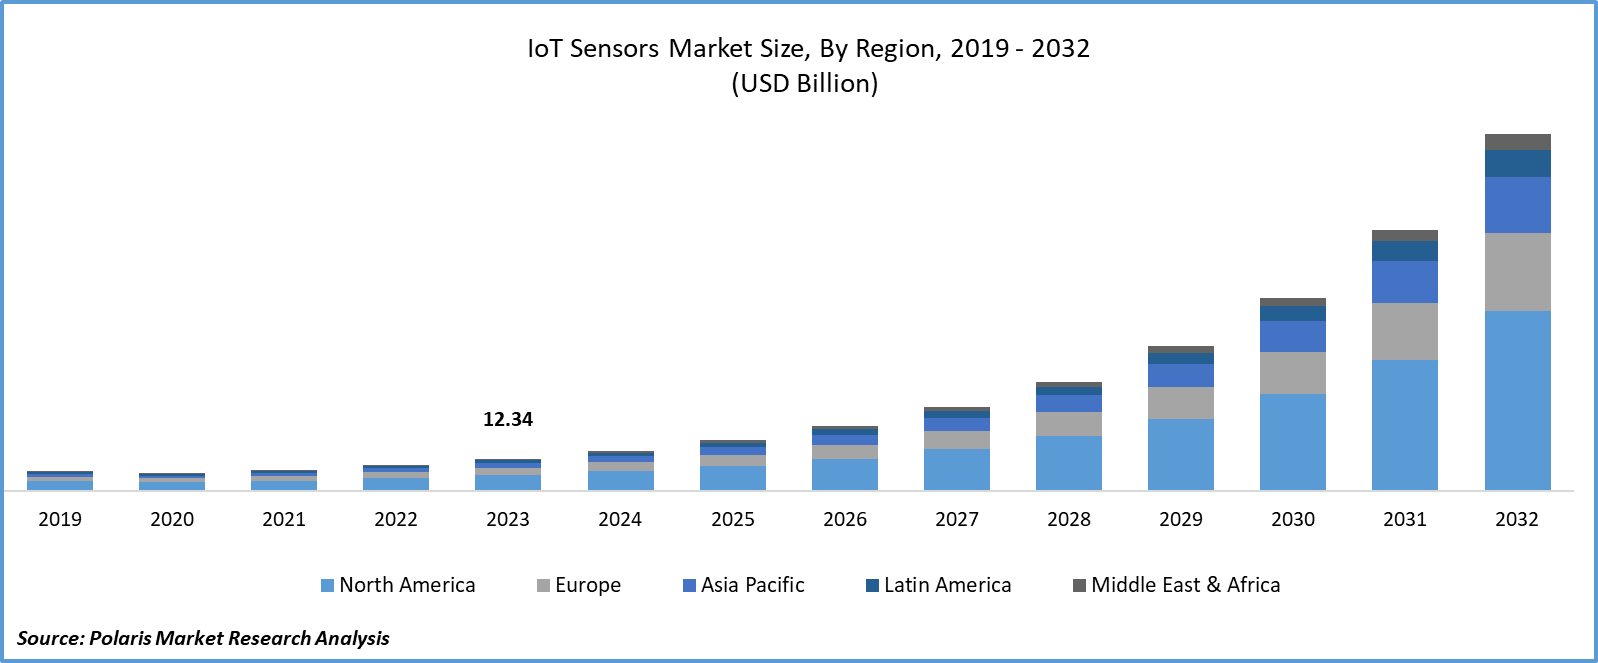 IoT Sensors Market Size